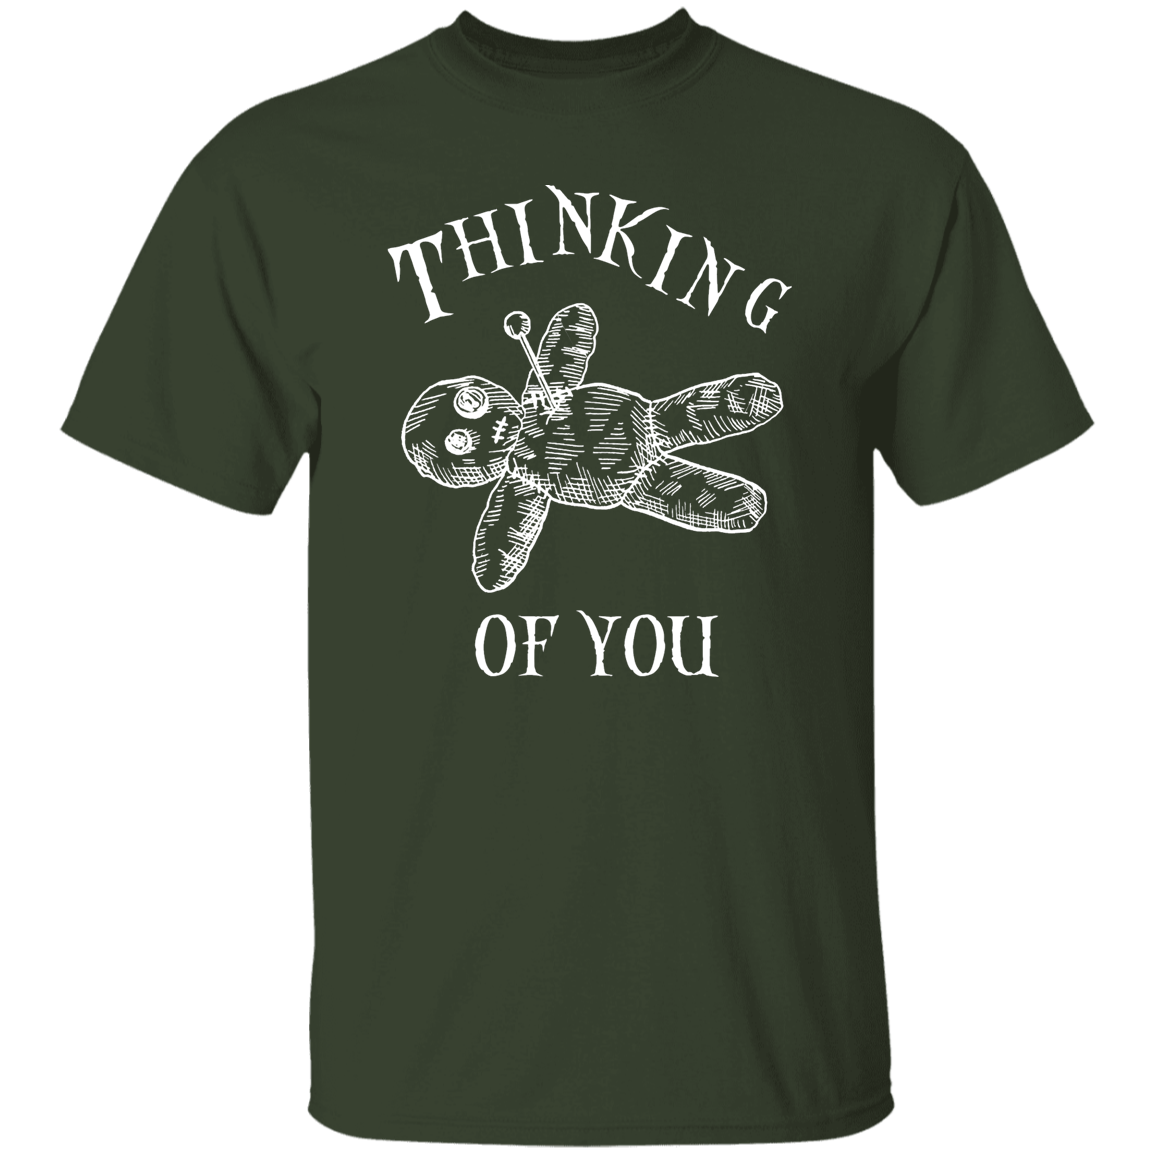 THINKING OF YOU 5.3 oz. T-Shirt